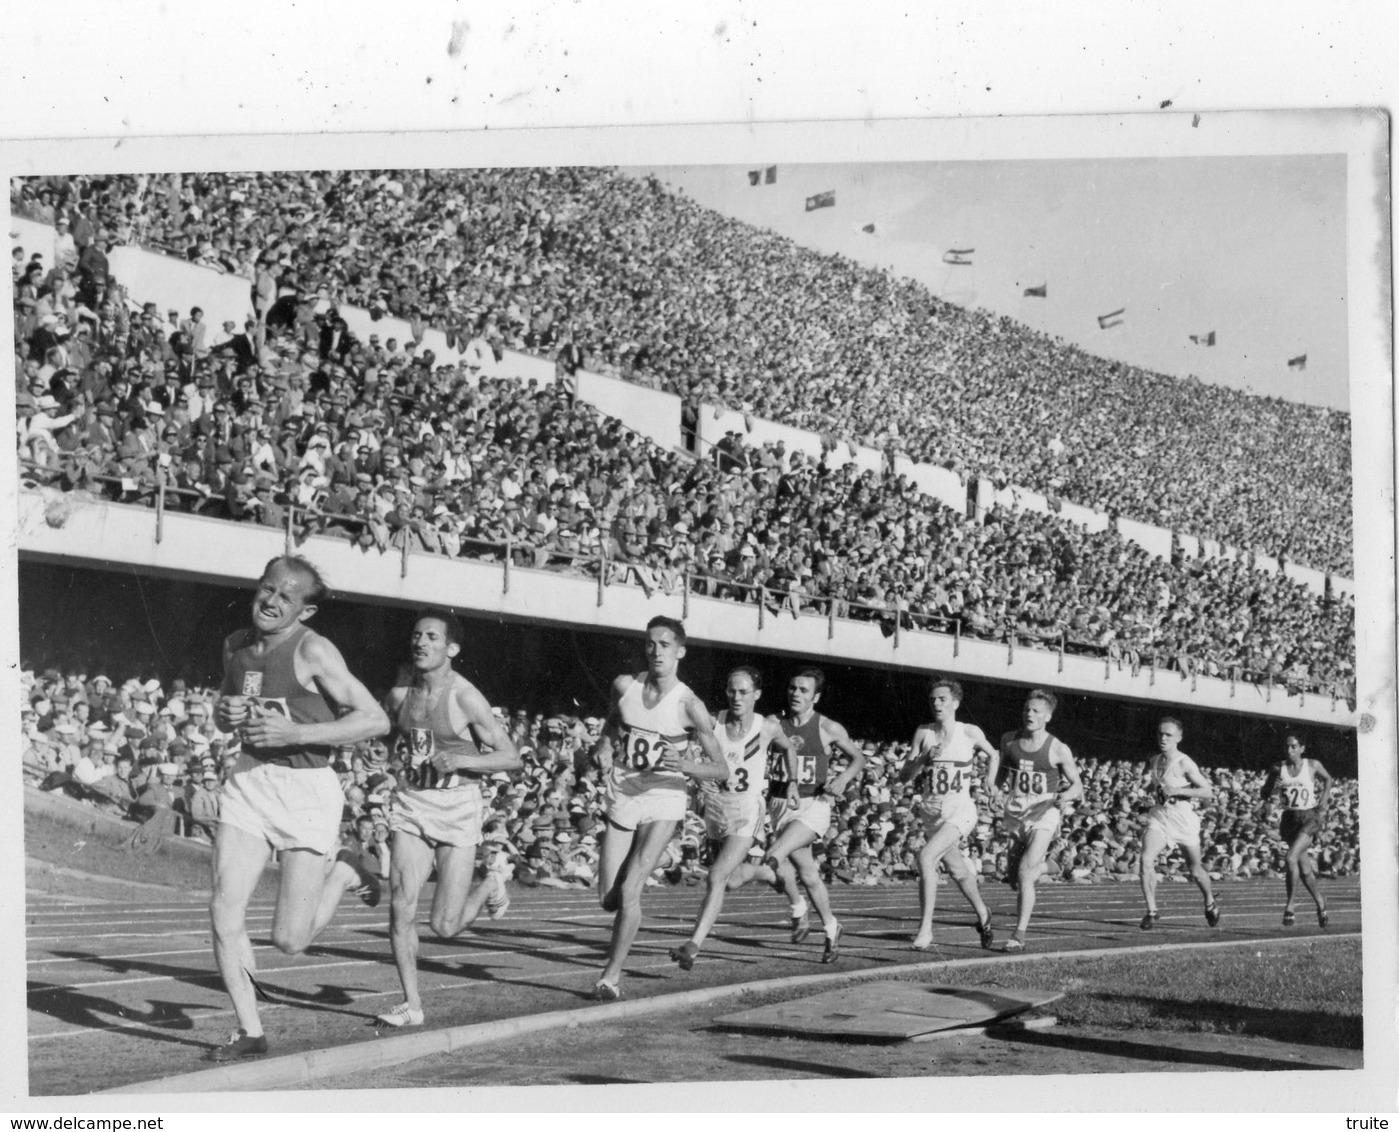 JEUX OLYMPIQUES D'HELSINKI 1952 ATHLETISME EMIL ZATOPEK DEVANT ALAIN MIMOUN DANS LE STADE  CARTE PHOTO - Olympische Spelen